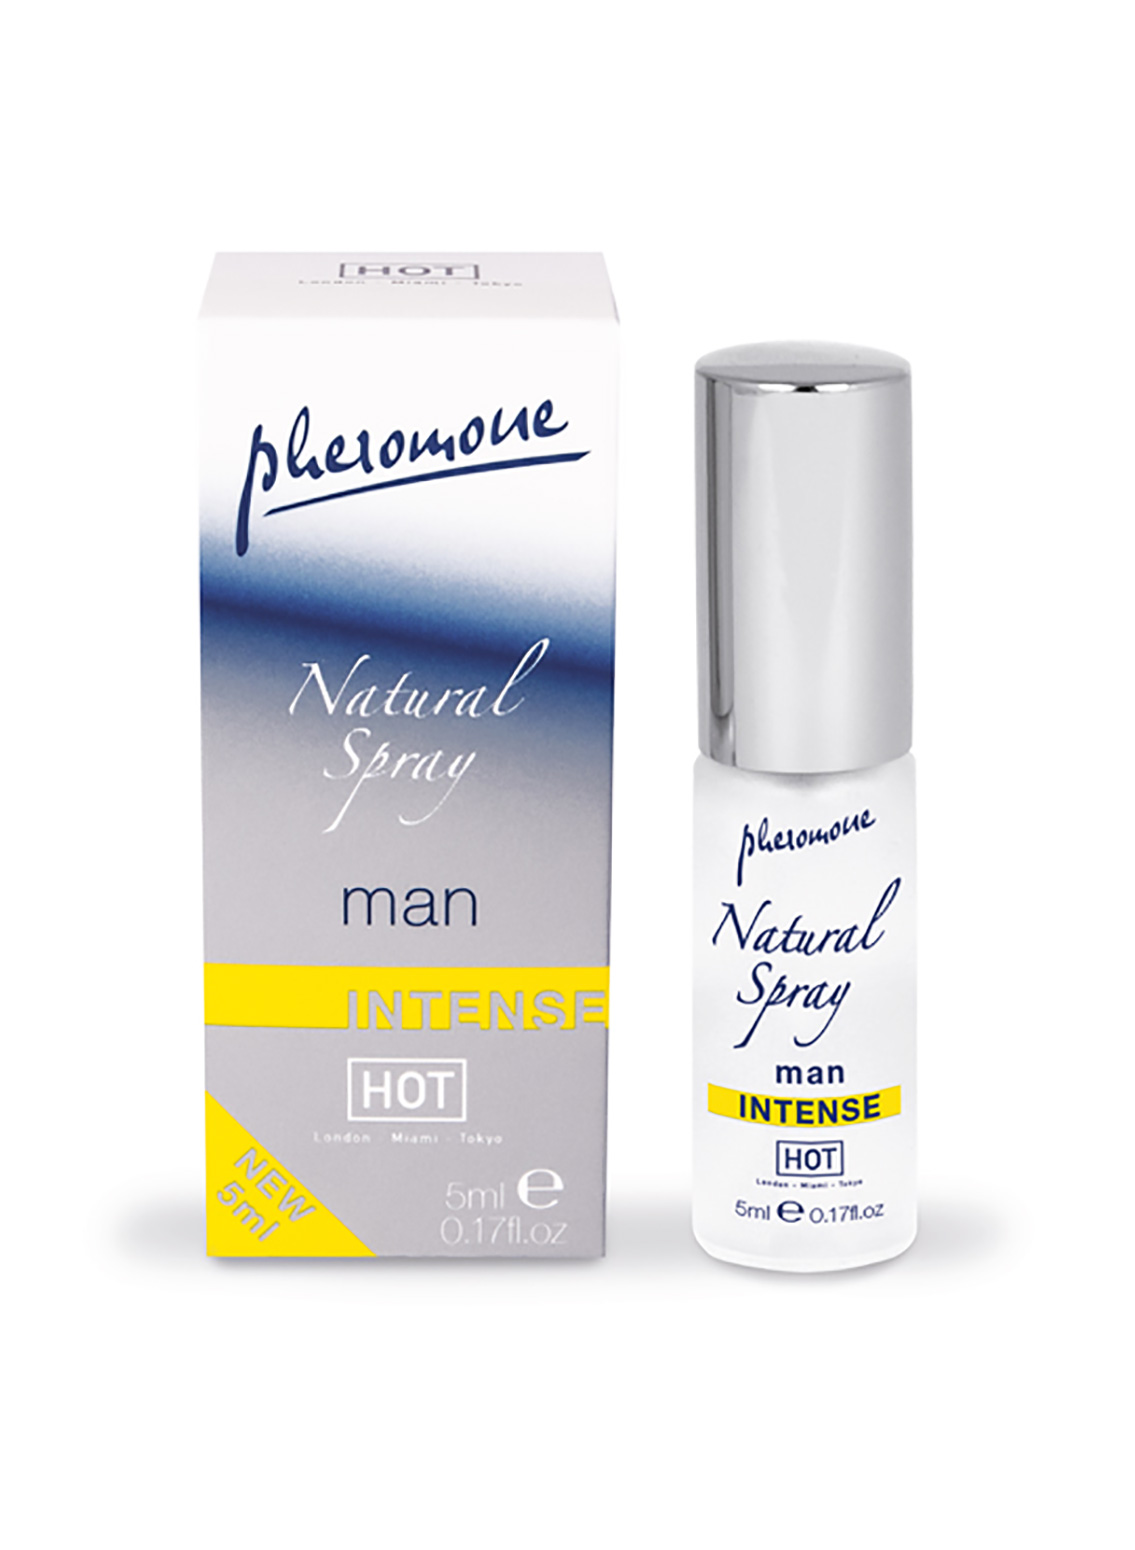 Hot Natural Spray Intense Man 5ml